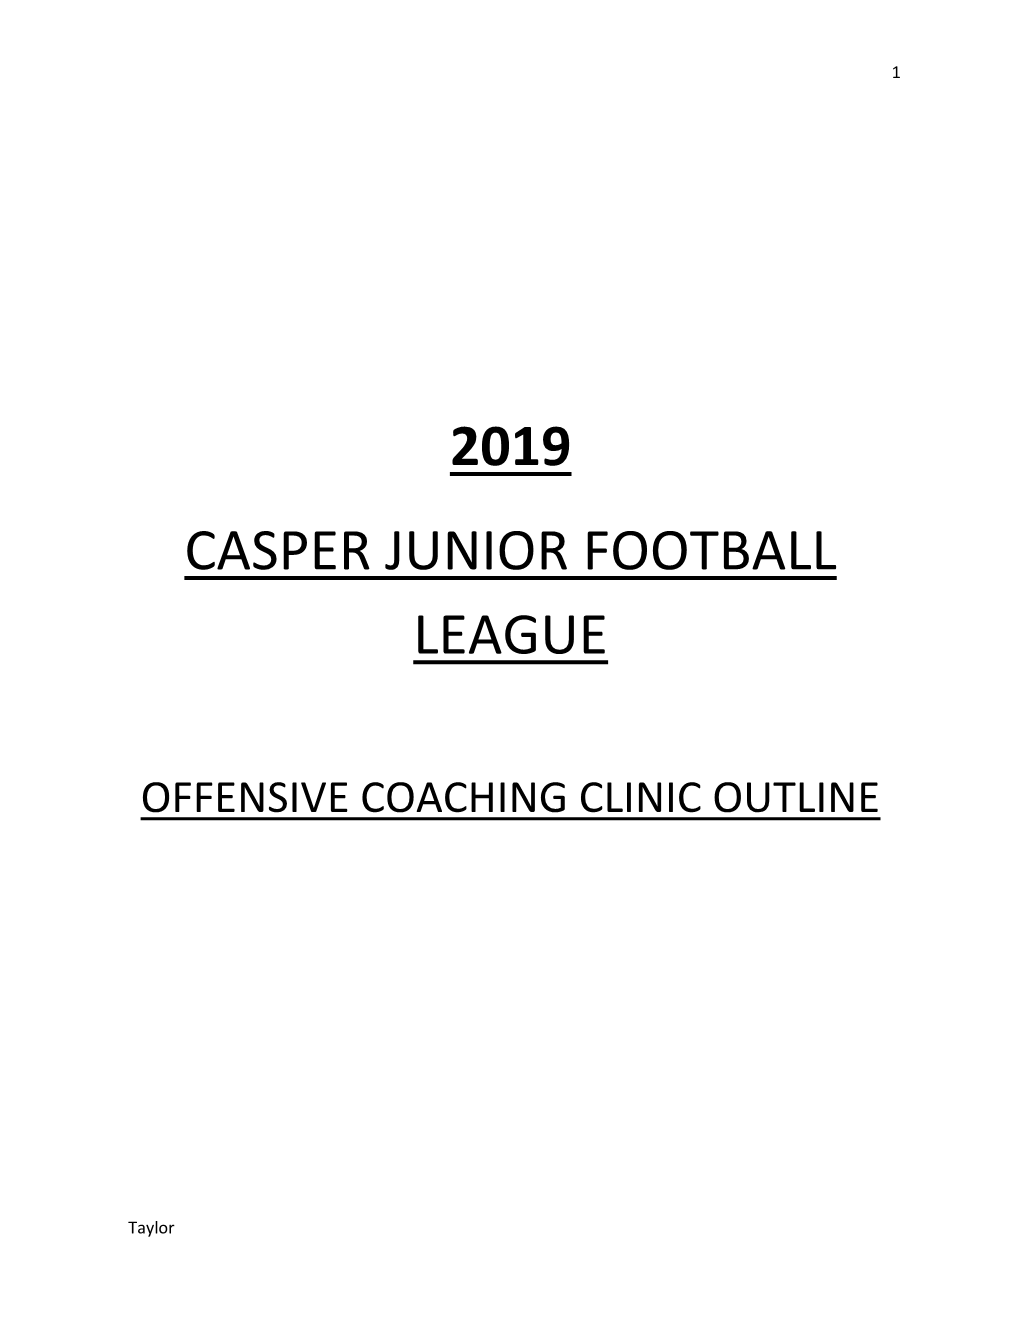 2019 Casper Junior Football League